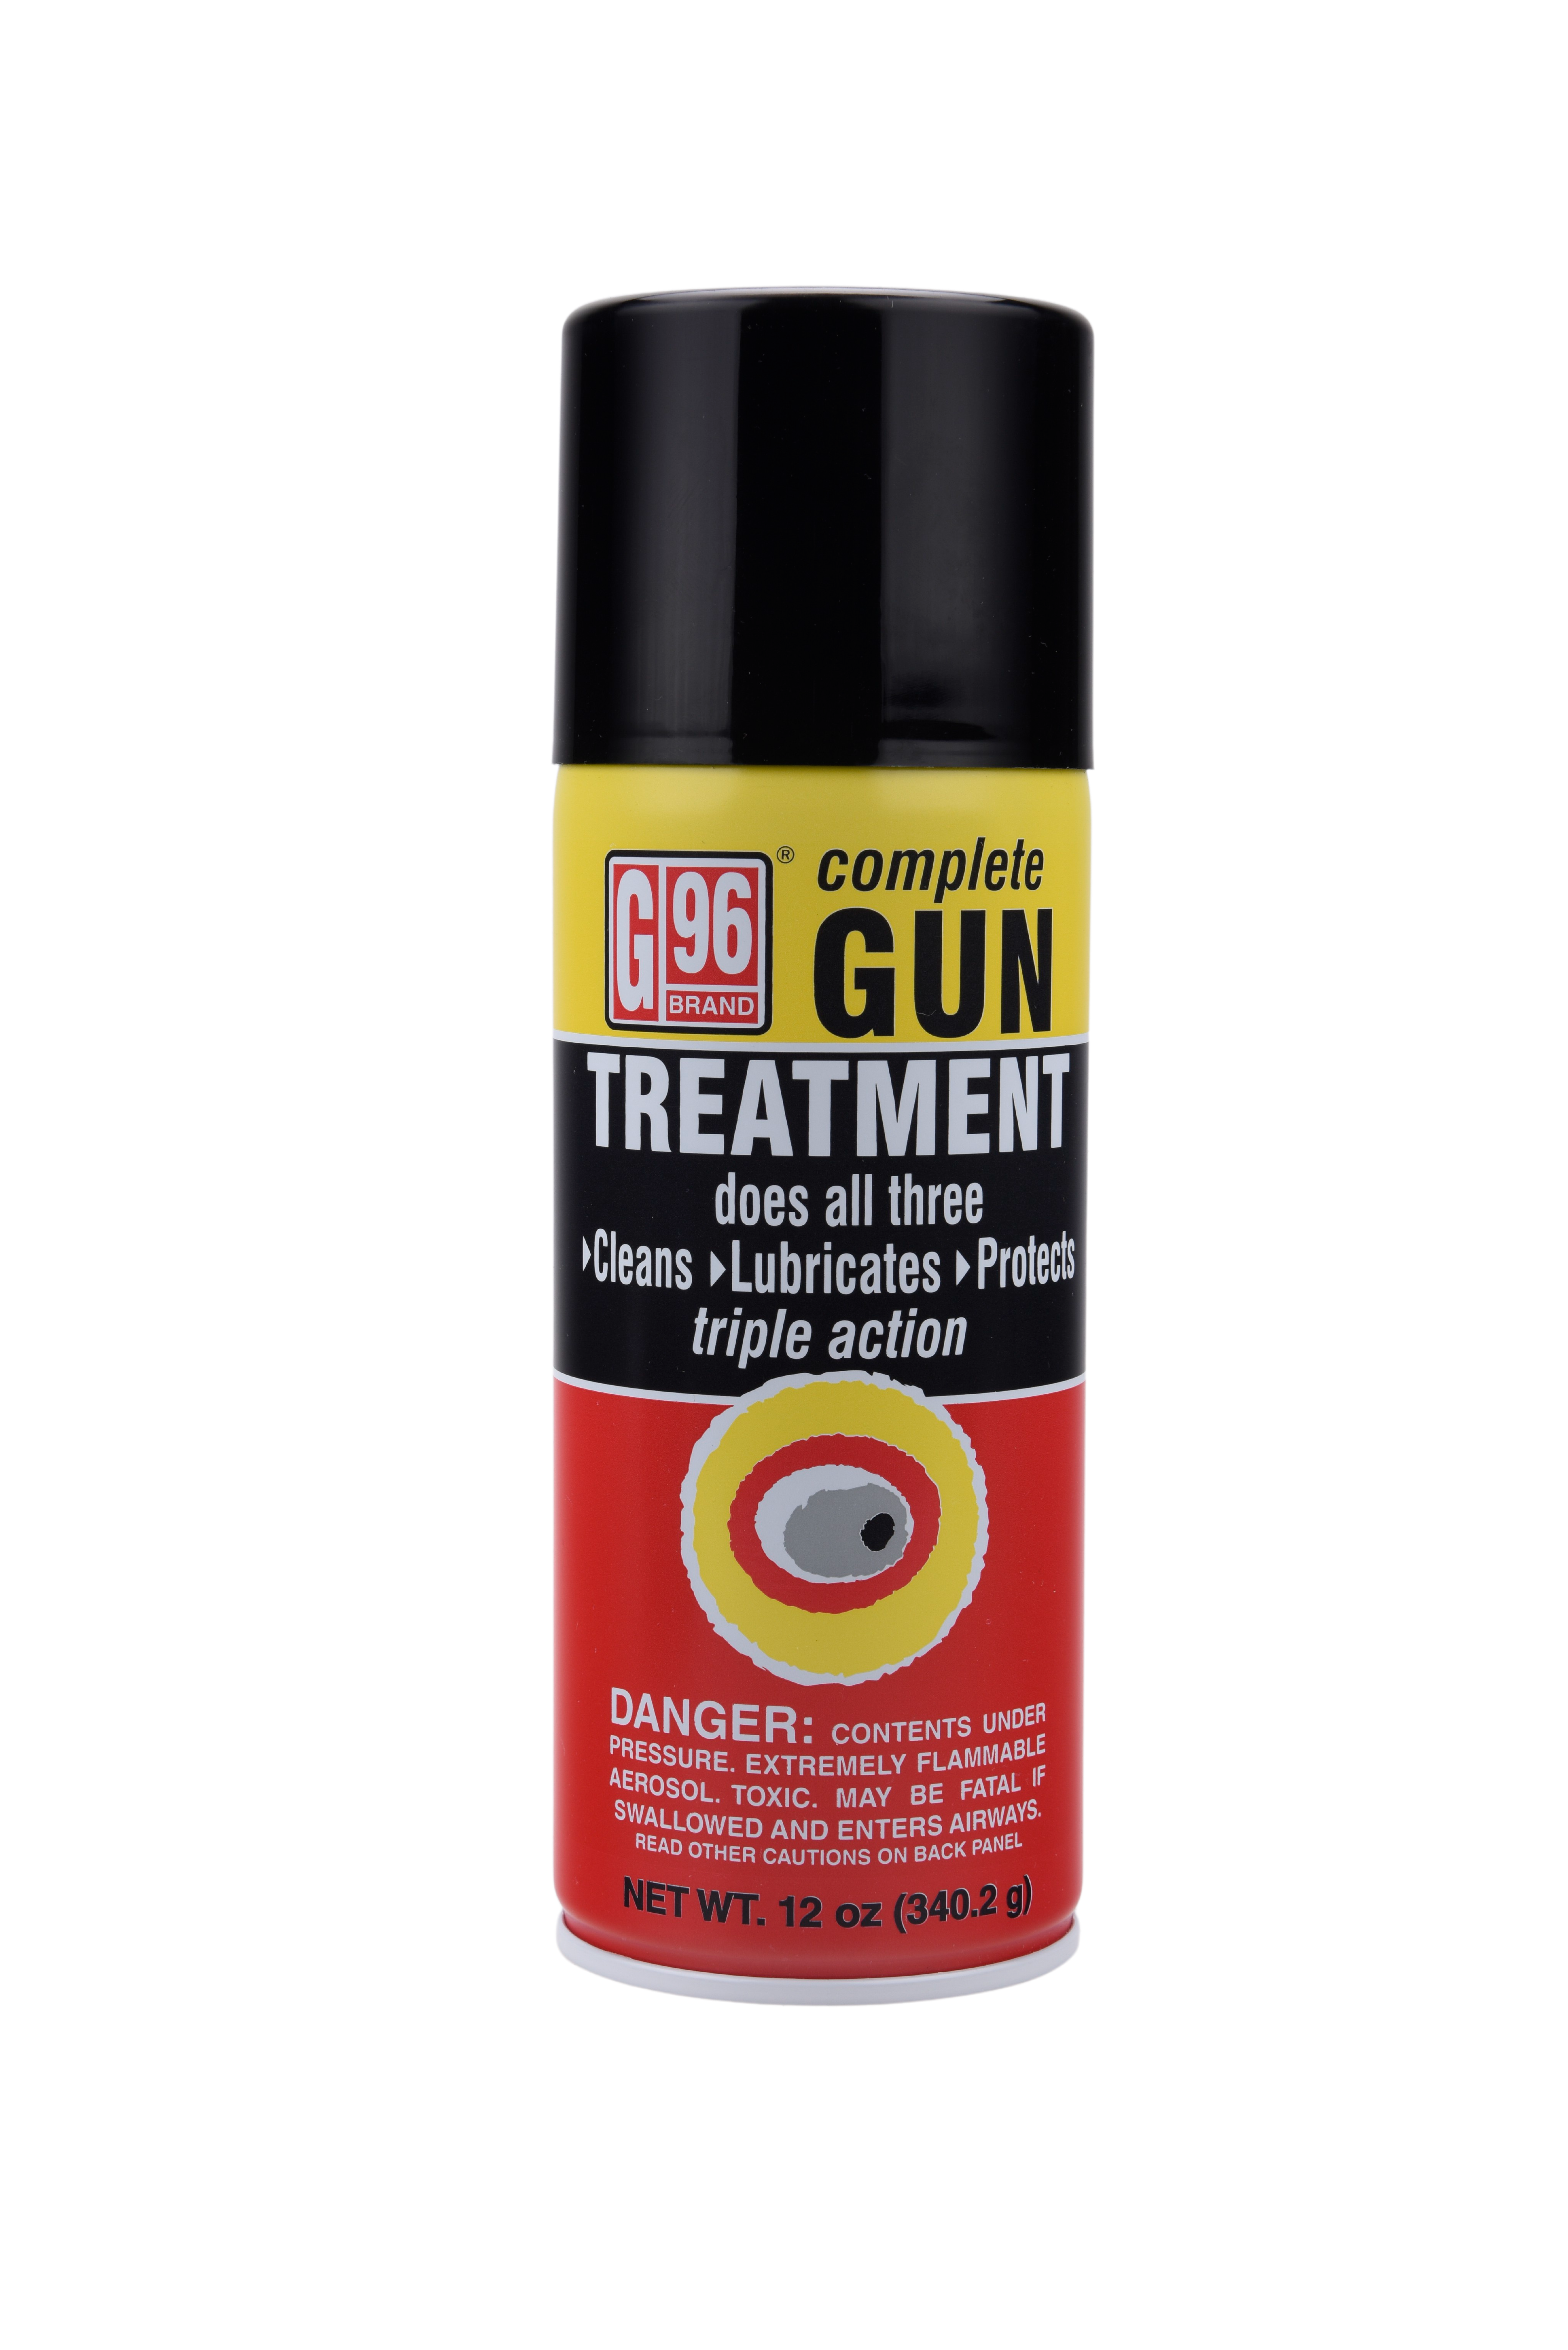 Gun Treatment ® – G96 Products Inc.